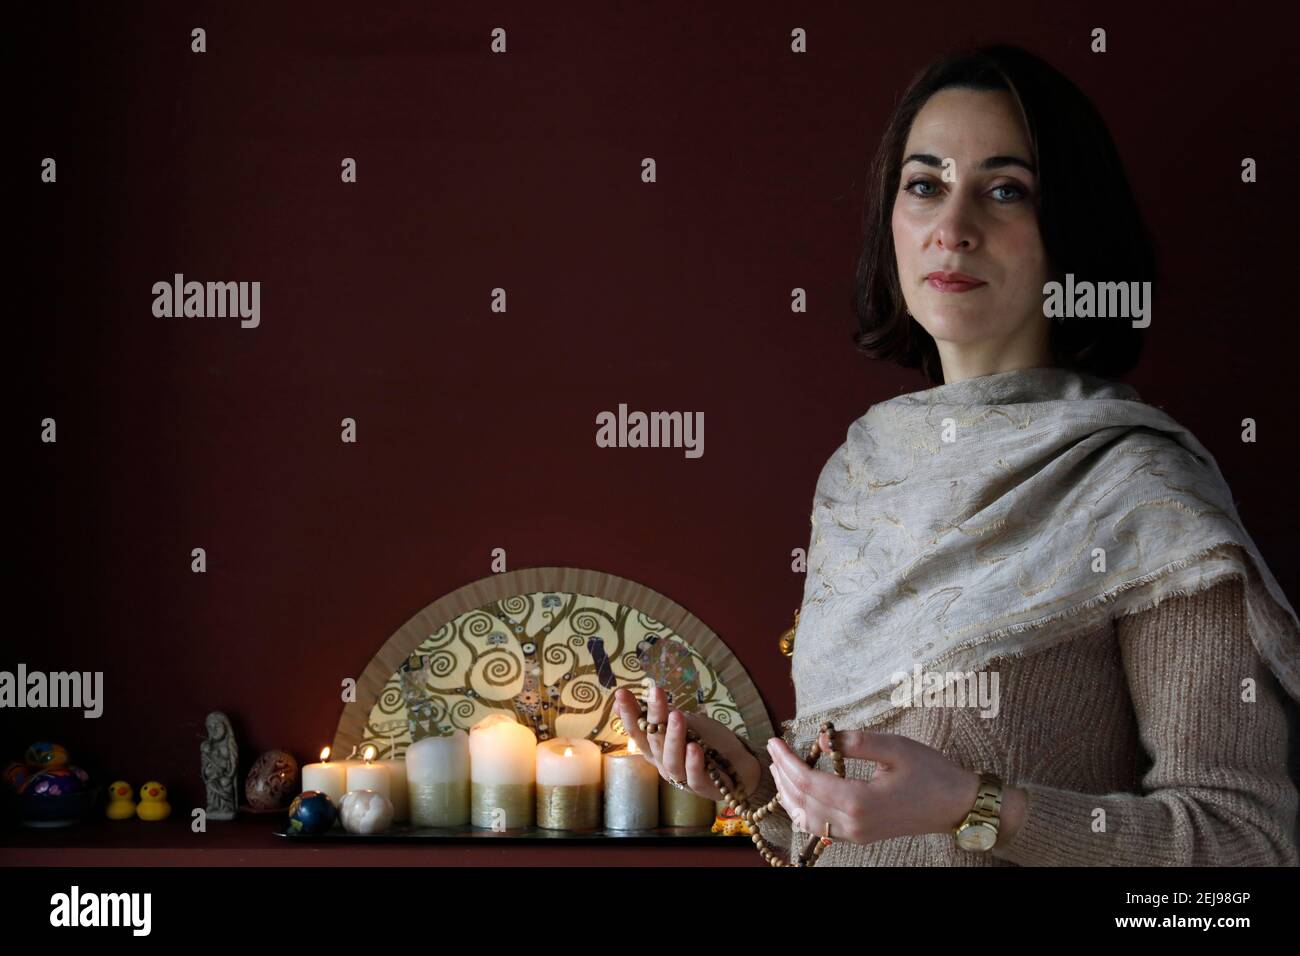 Kahina bahloul, la prima donna imam in francia, a parigi Foto Stock